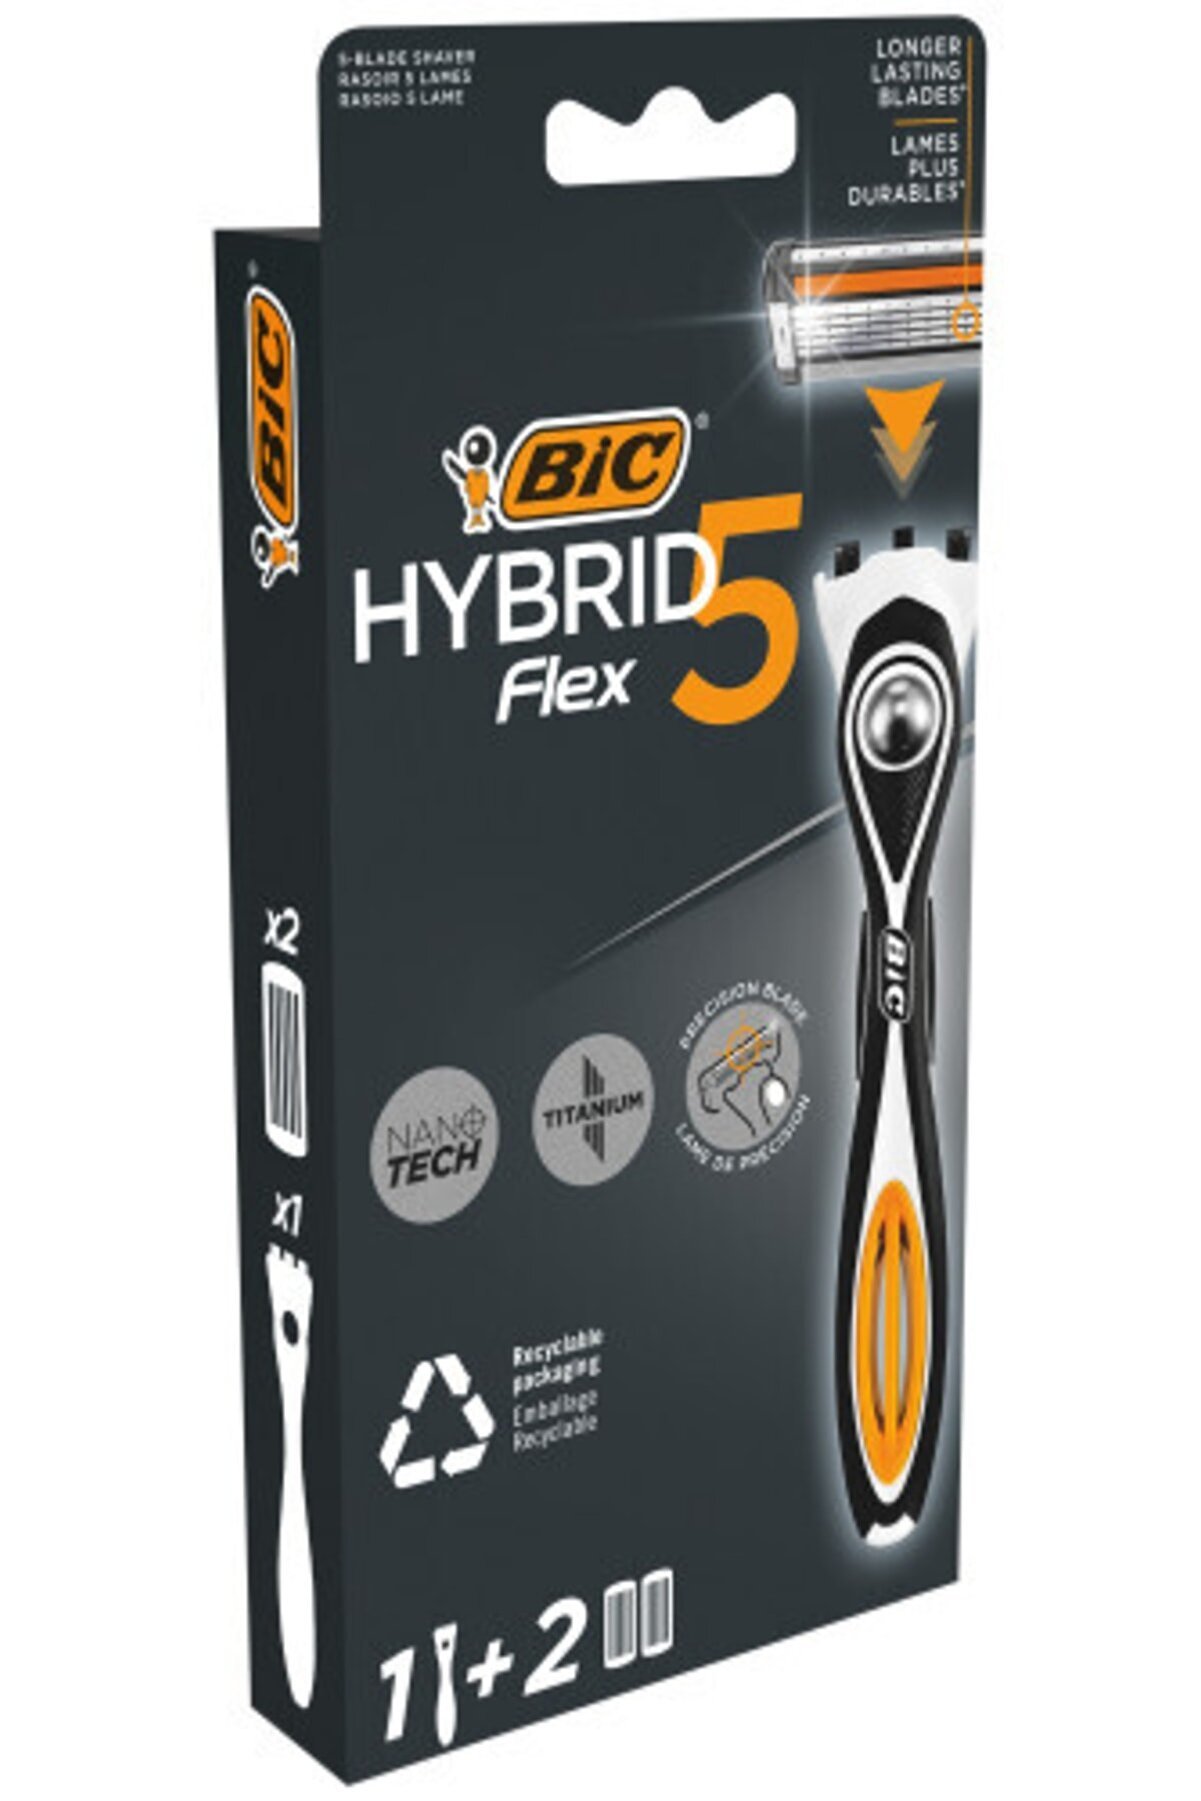 Bic flex hybrid купить. BIC Flex 5 Hybrid. Бритва BIC Flex 5 Hybrid. BIC Flex 5 Hybrid ручка 2 кассеты. Станок для бритья BIC Flex 5.